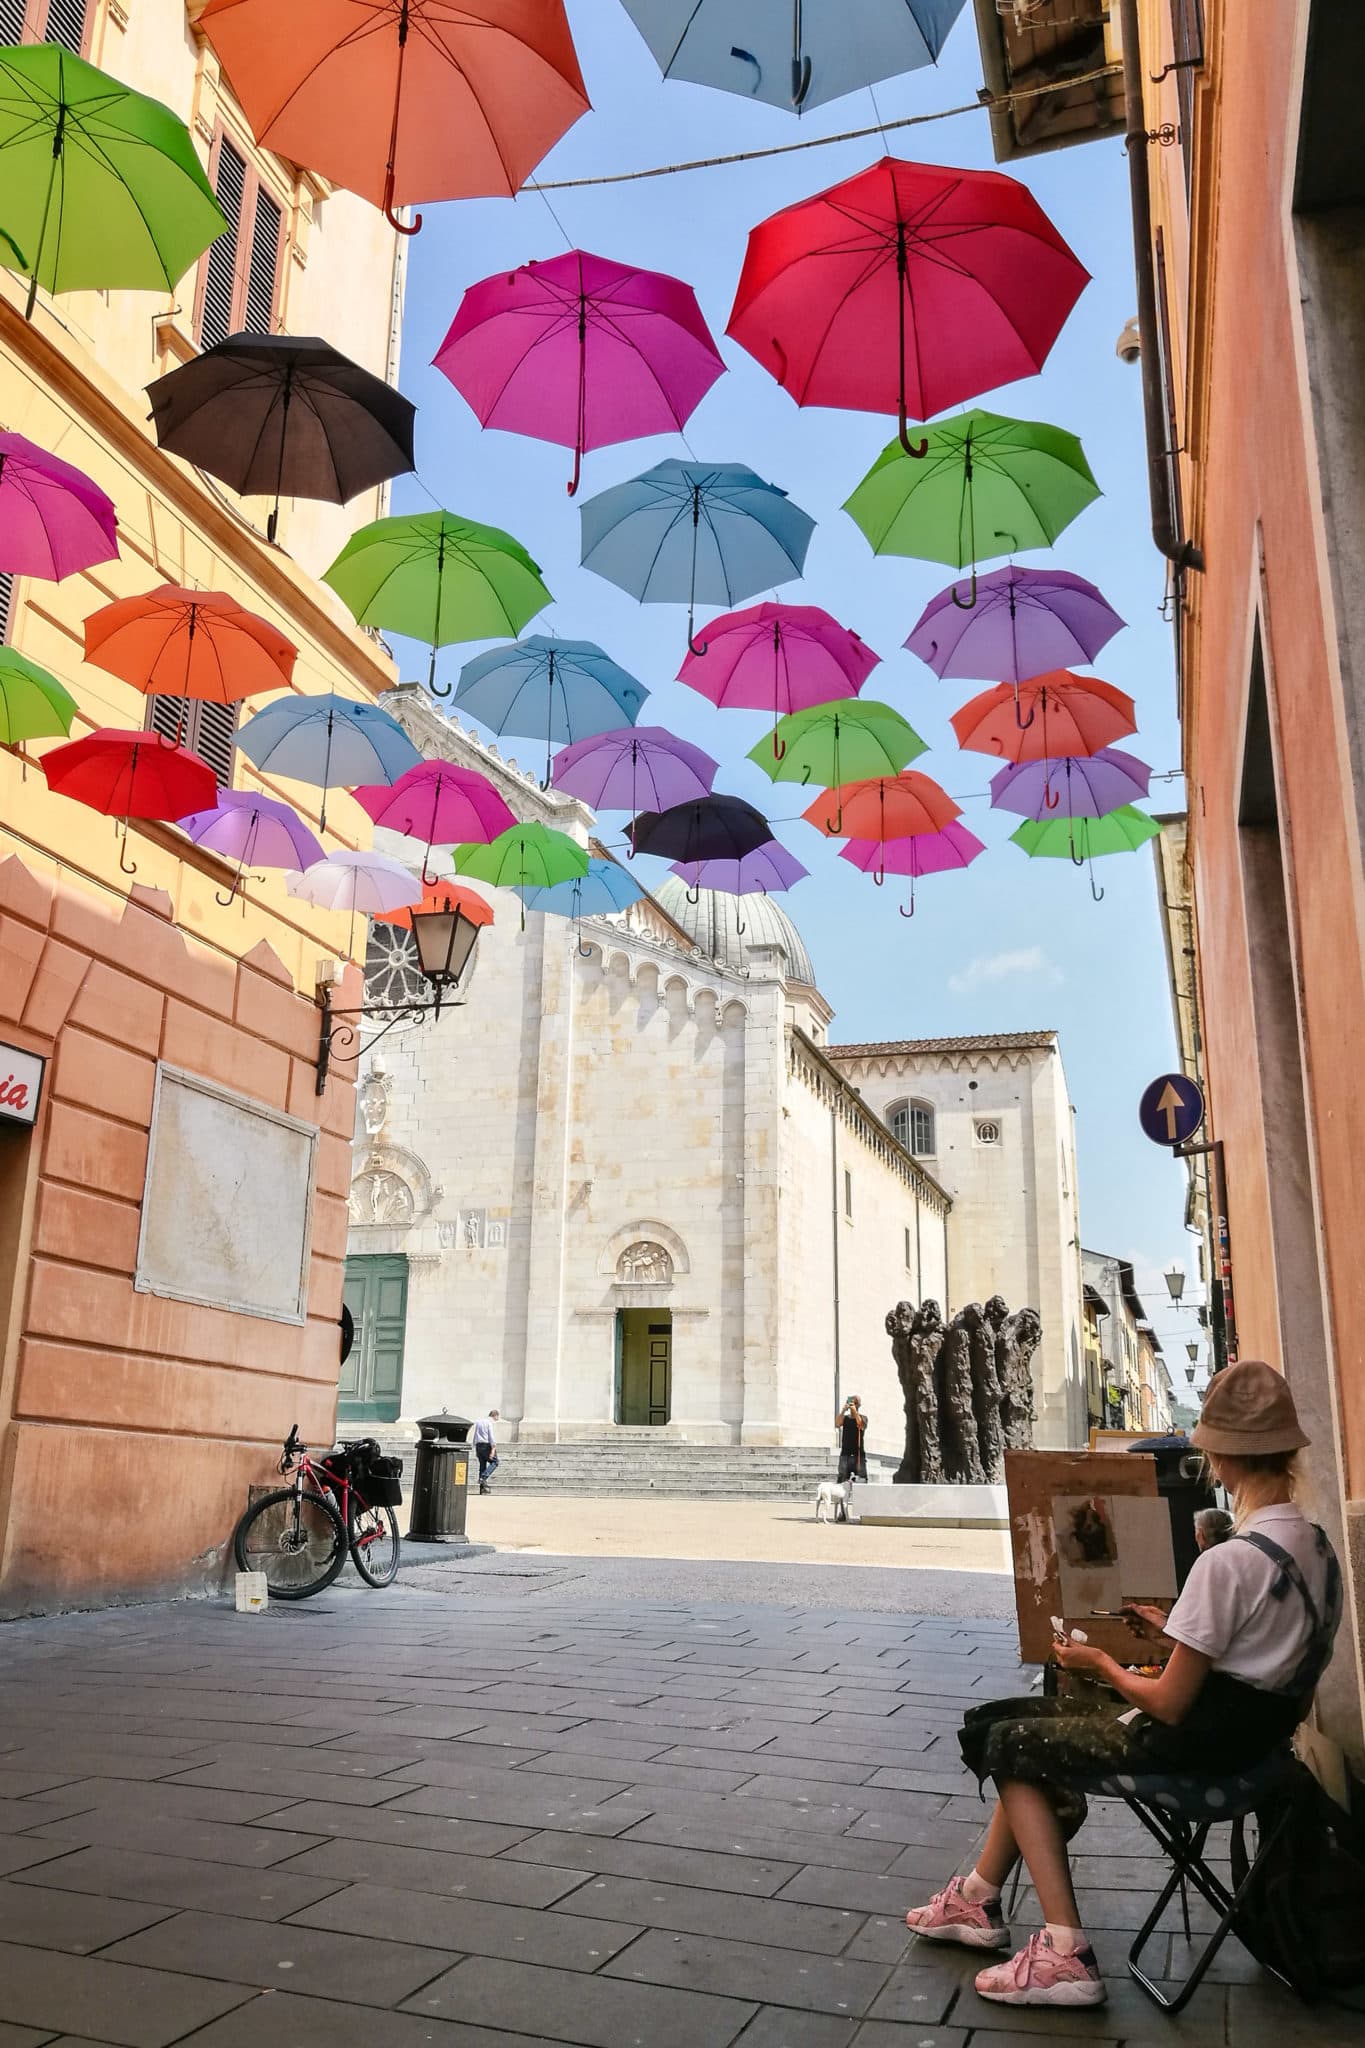 Painter under the floating umbrellas in Pietrasanta